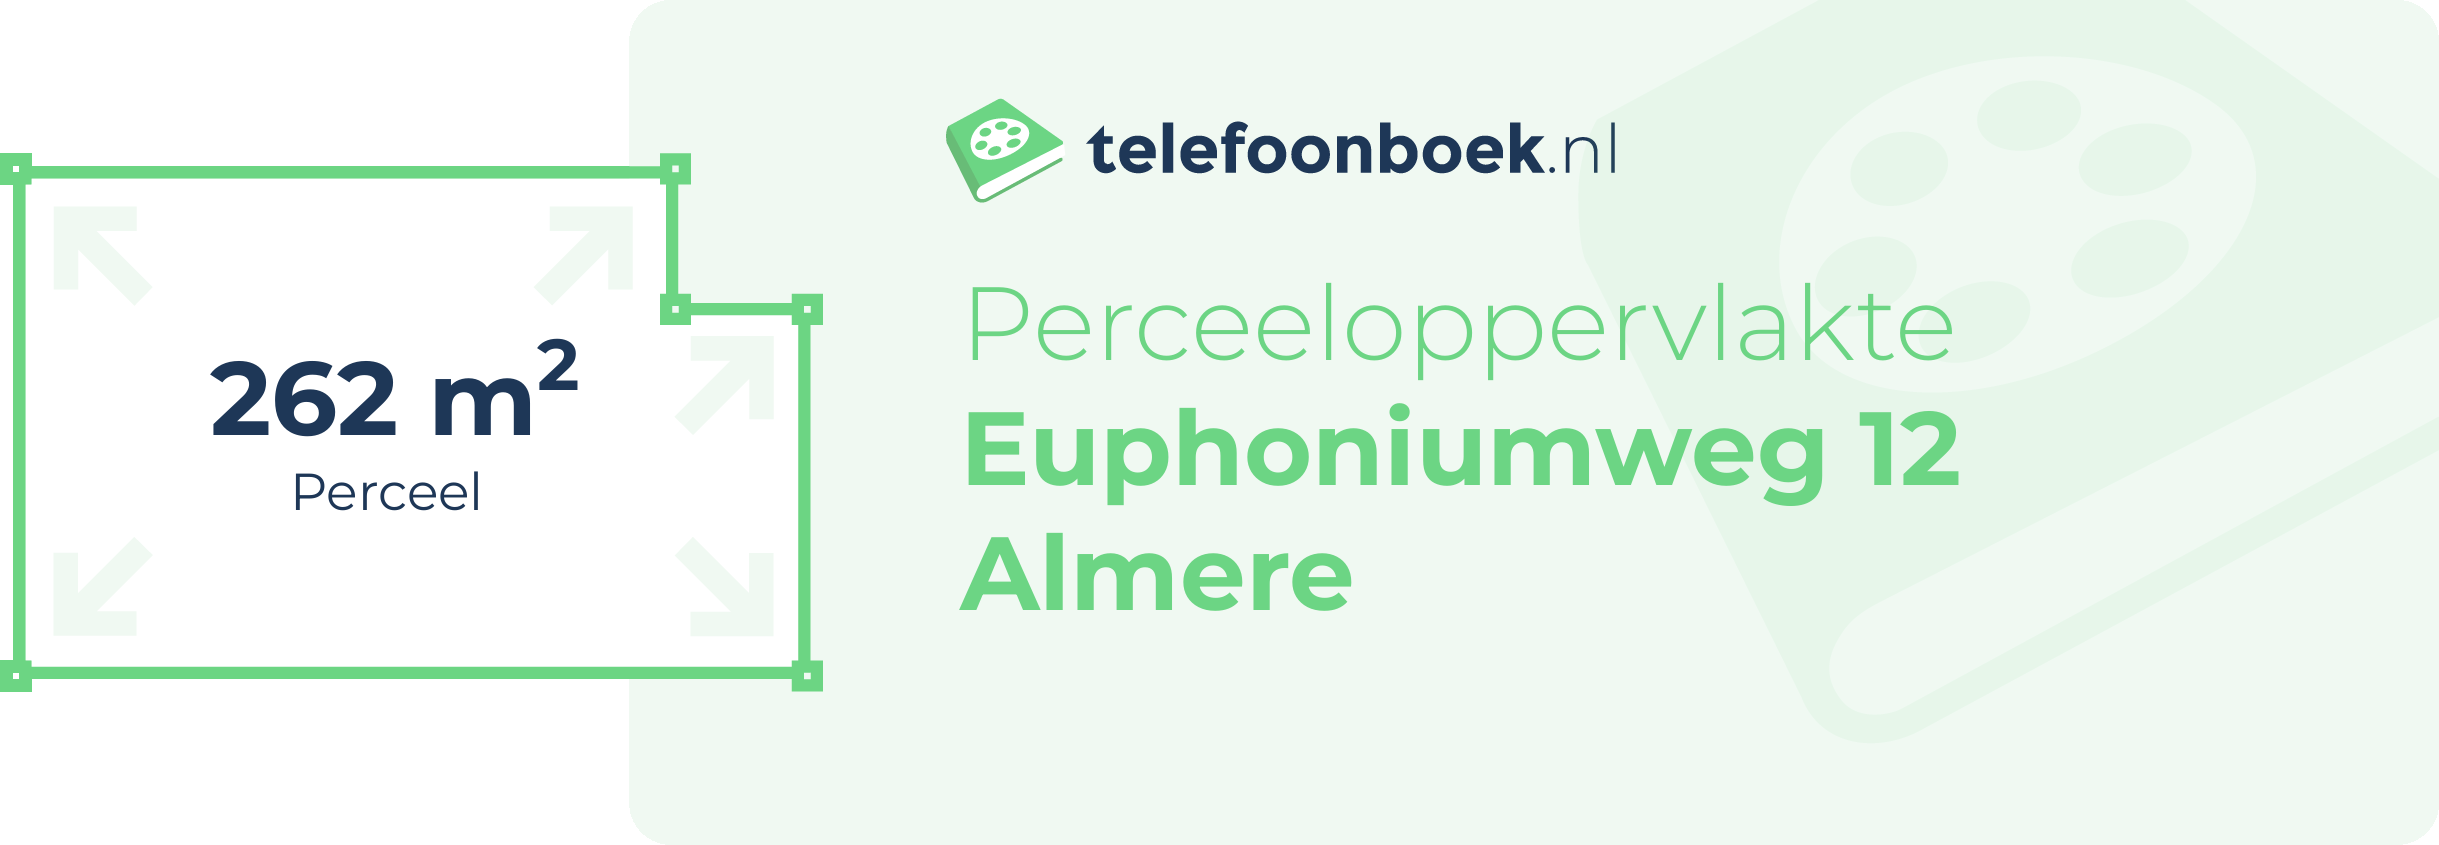 Perceeloppervlakte Euphoniumweg 12 Almere